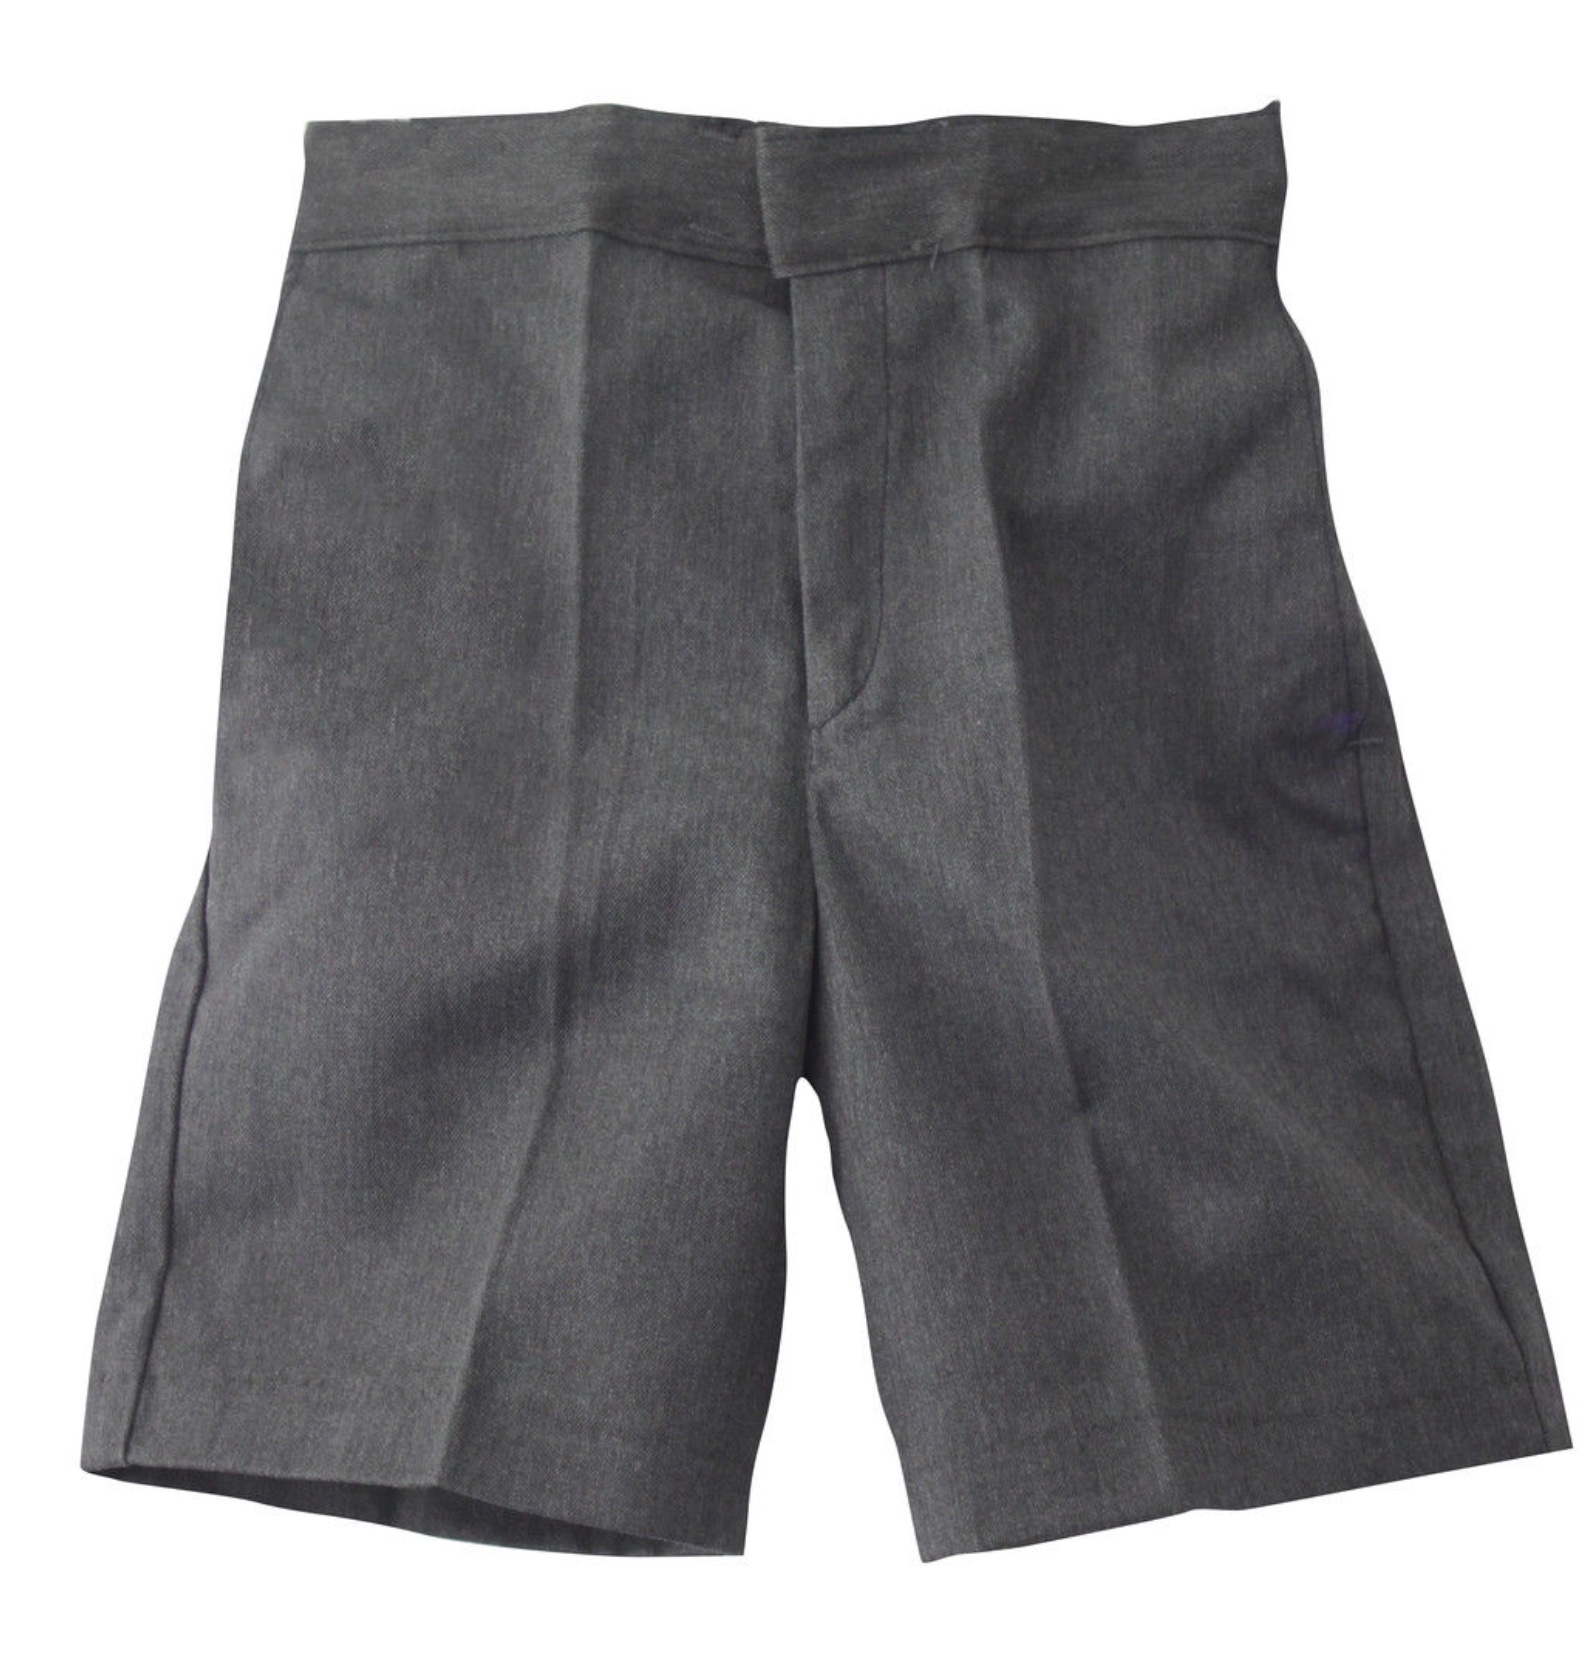 Boys' Dark Grey Shorts, Flat Front, Adjustable Waist, Zip Fly,Side and Back Pockets 4-5 Y